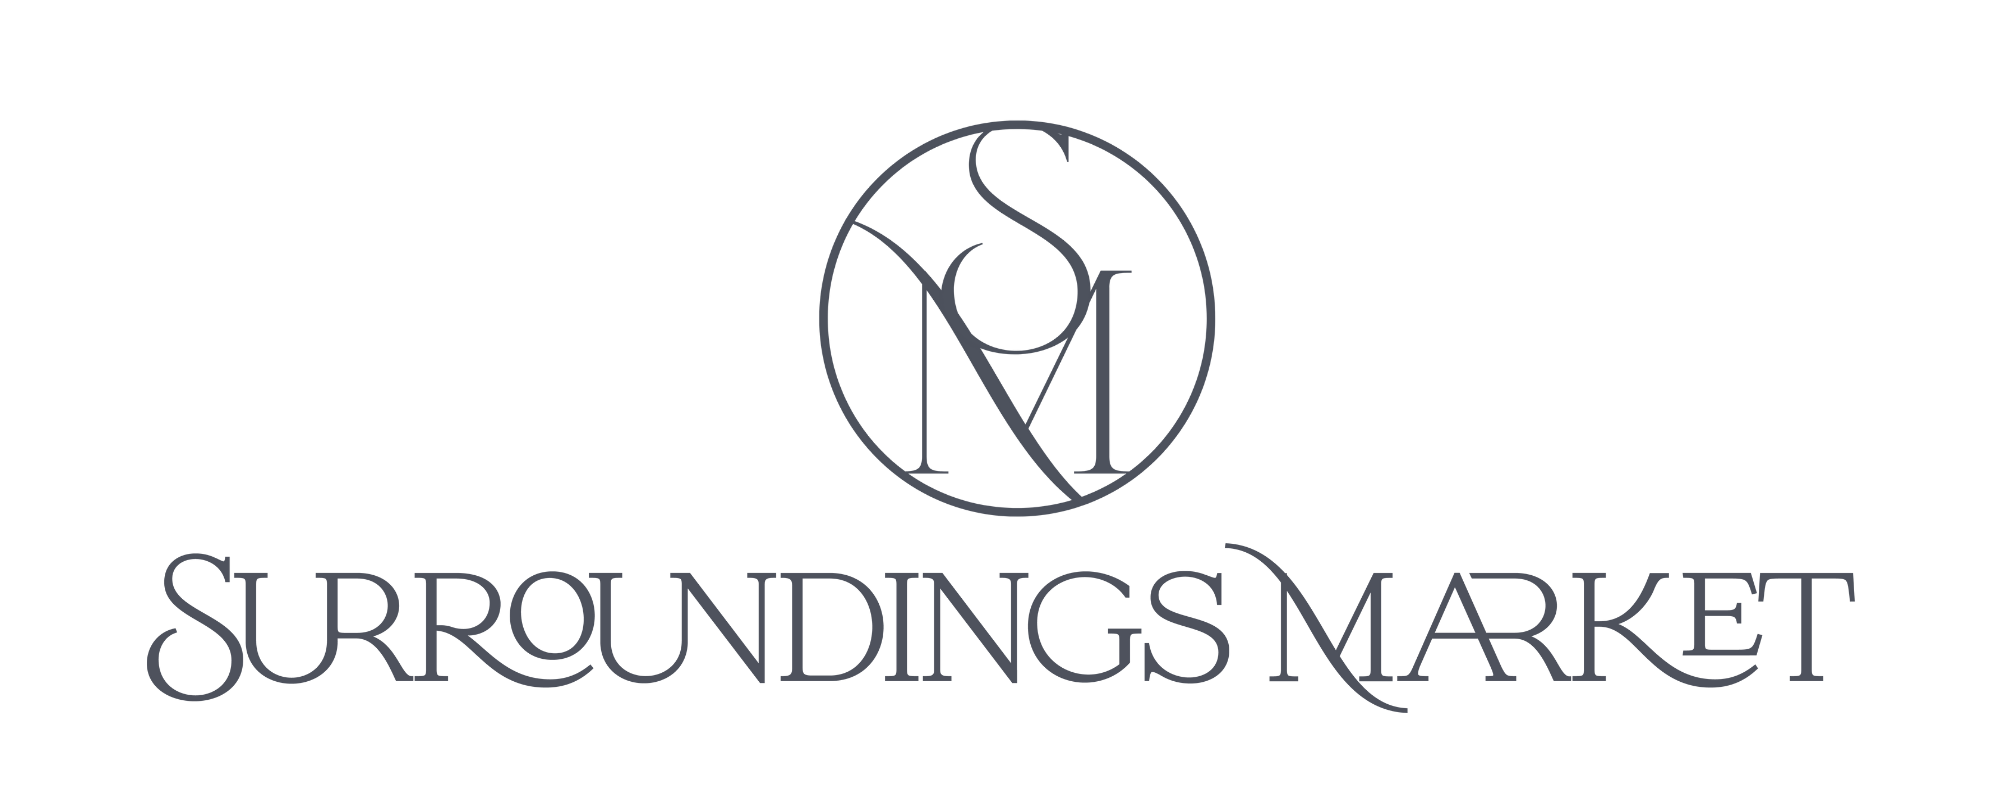 Surroundings Market coupons logo